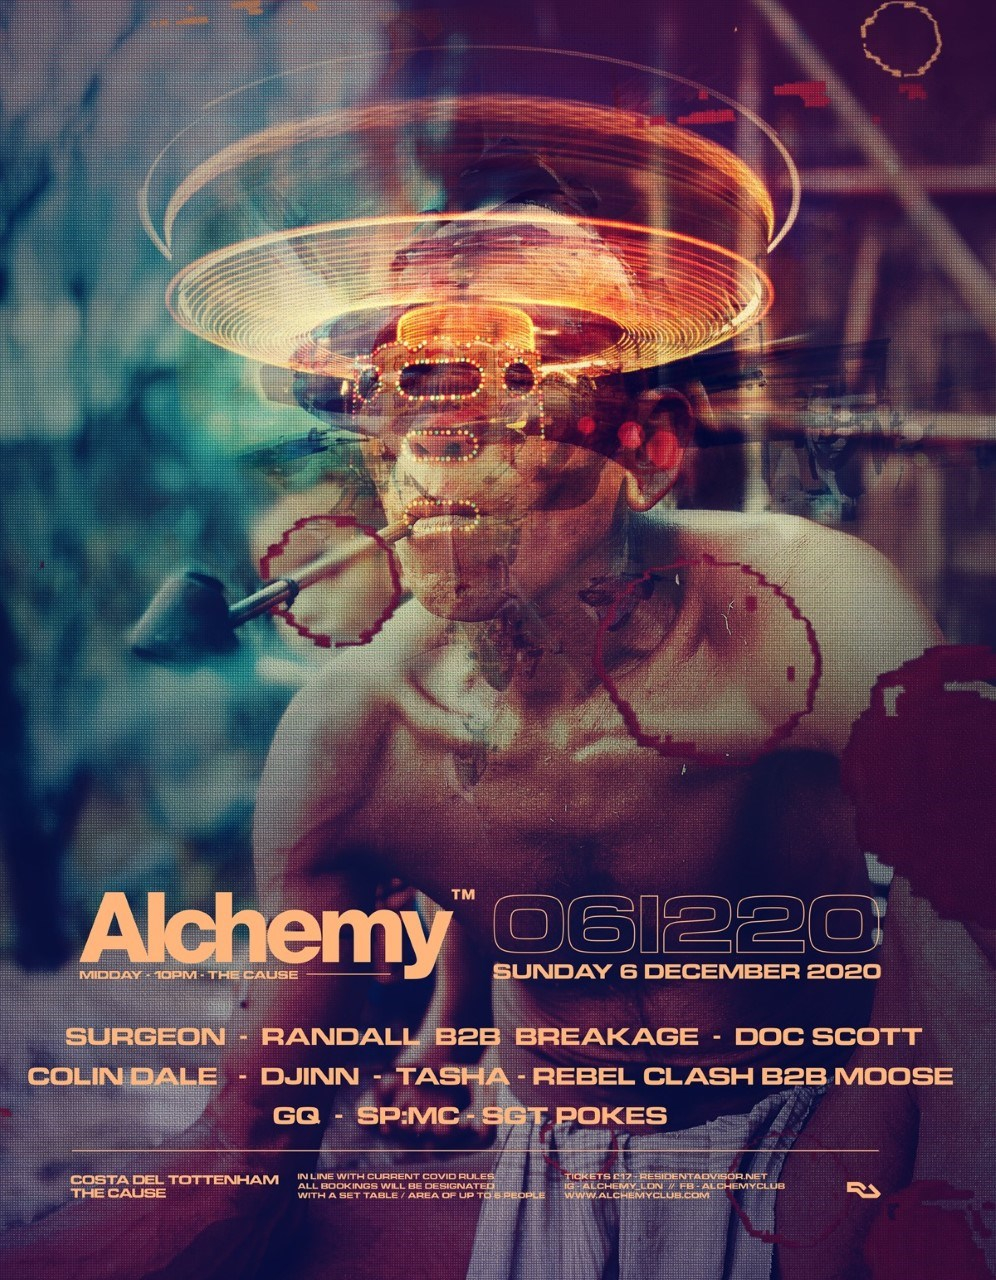 Alchemy with Surgeon, Randall b2b Breakage, Doc Scott, Colin Dale, Djinn - Flyer front